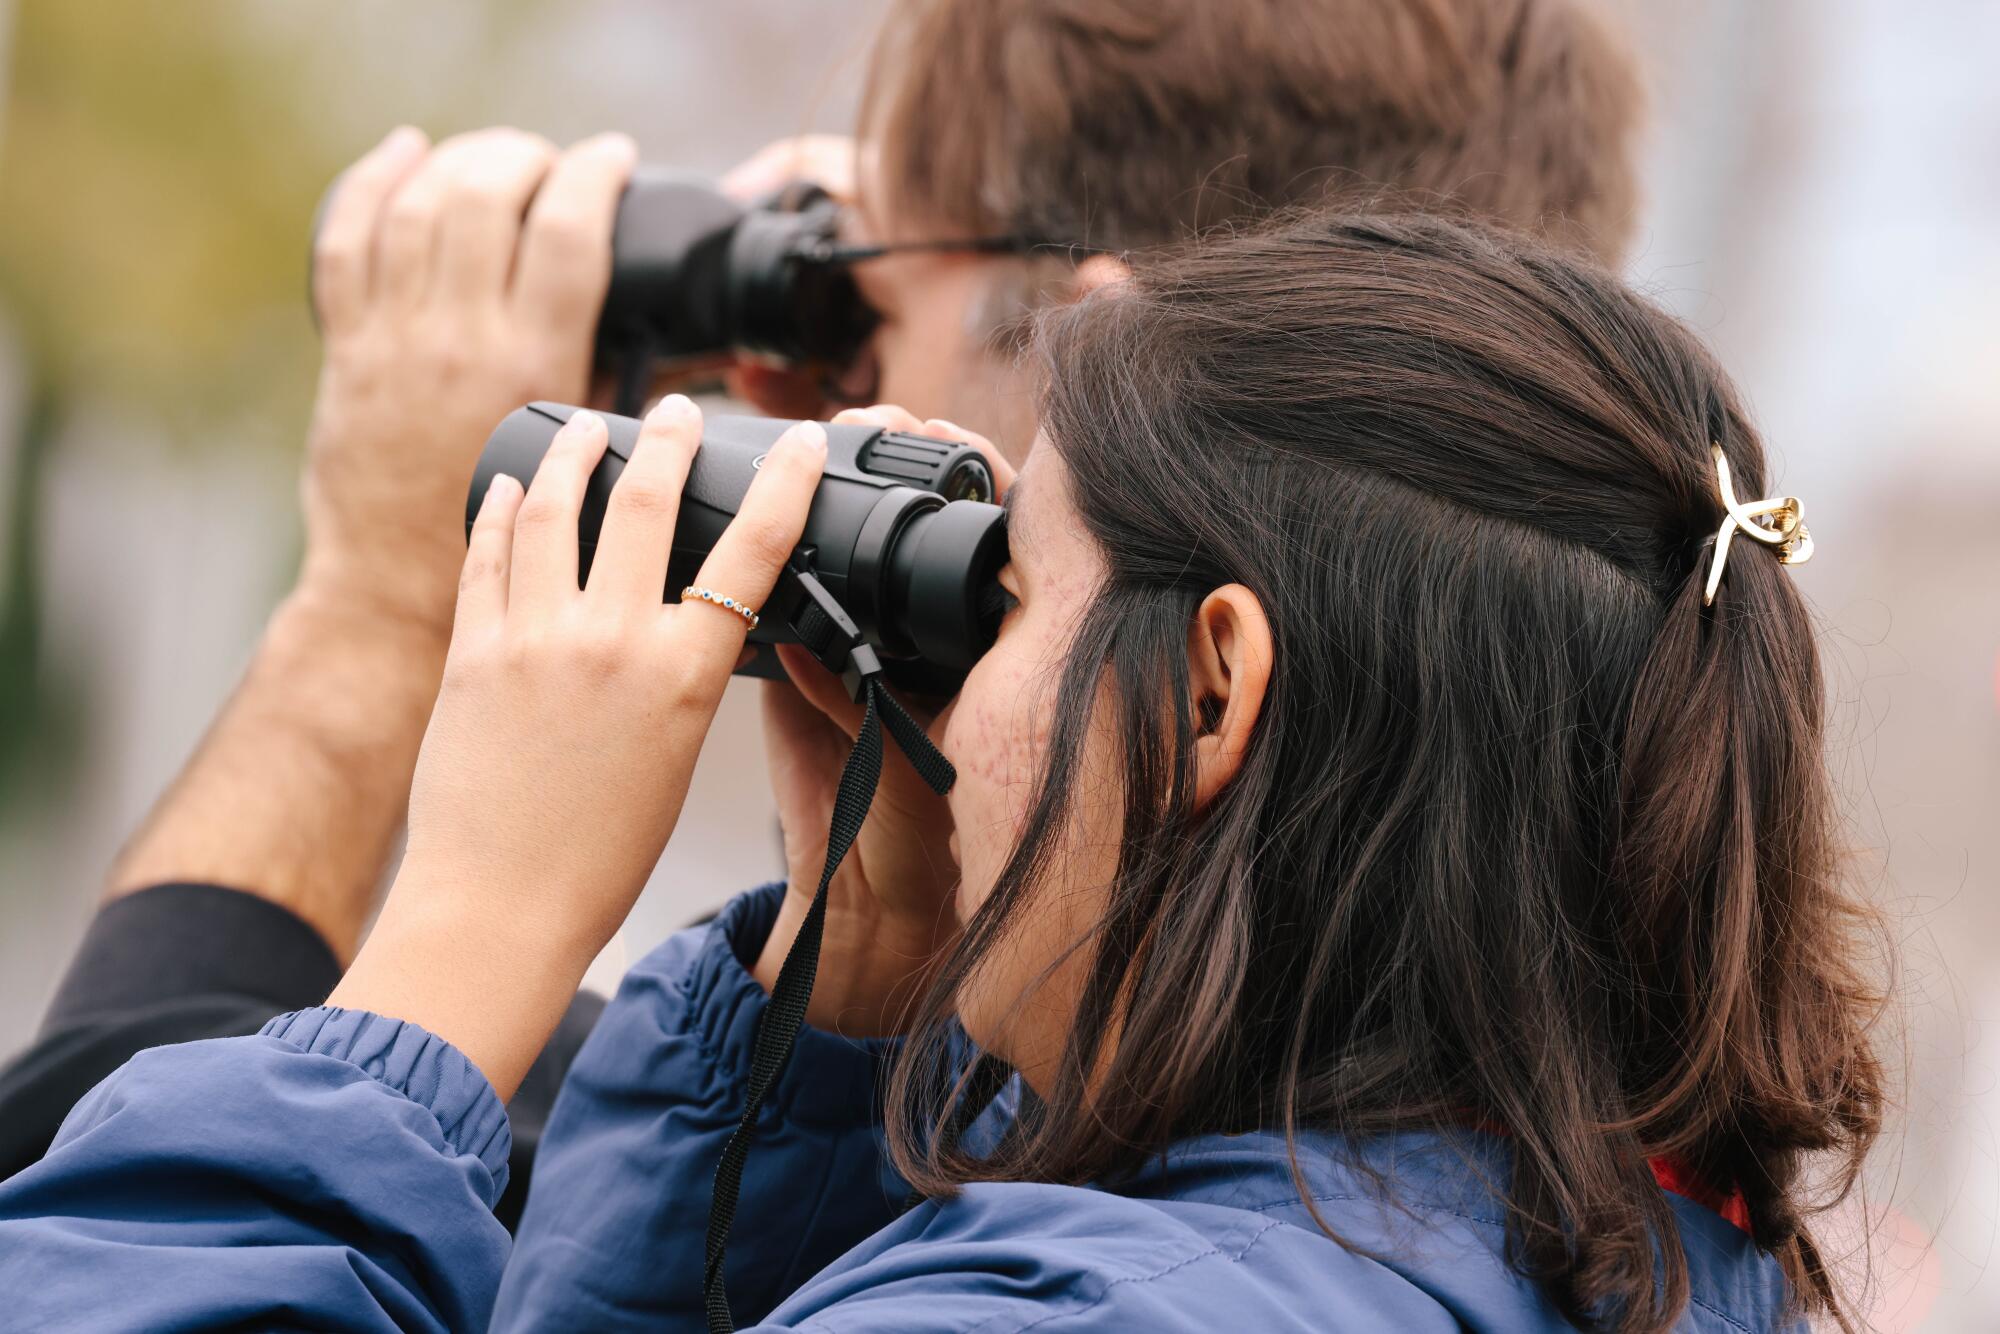 A man and woman look through binoculars.